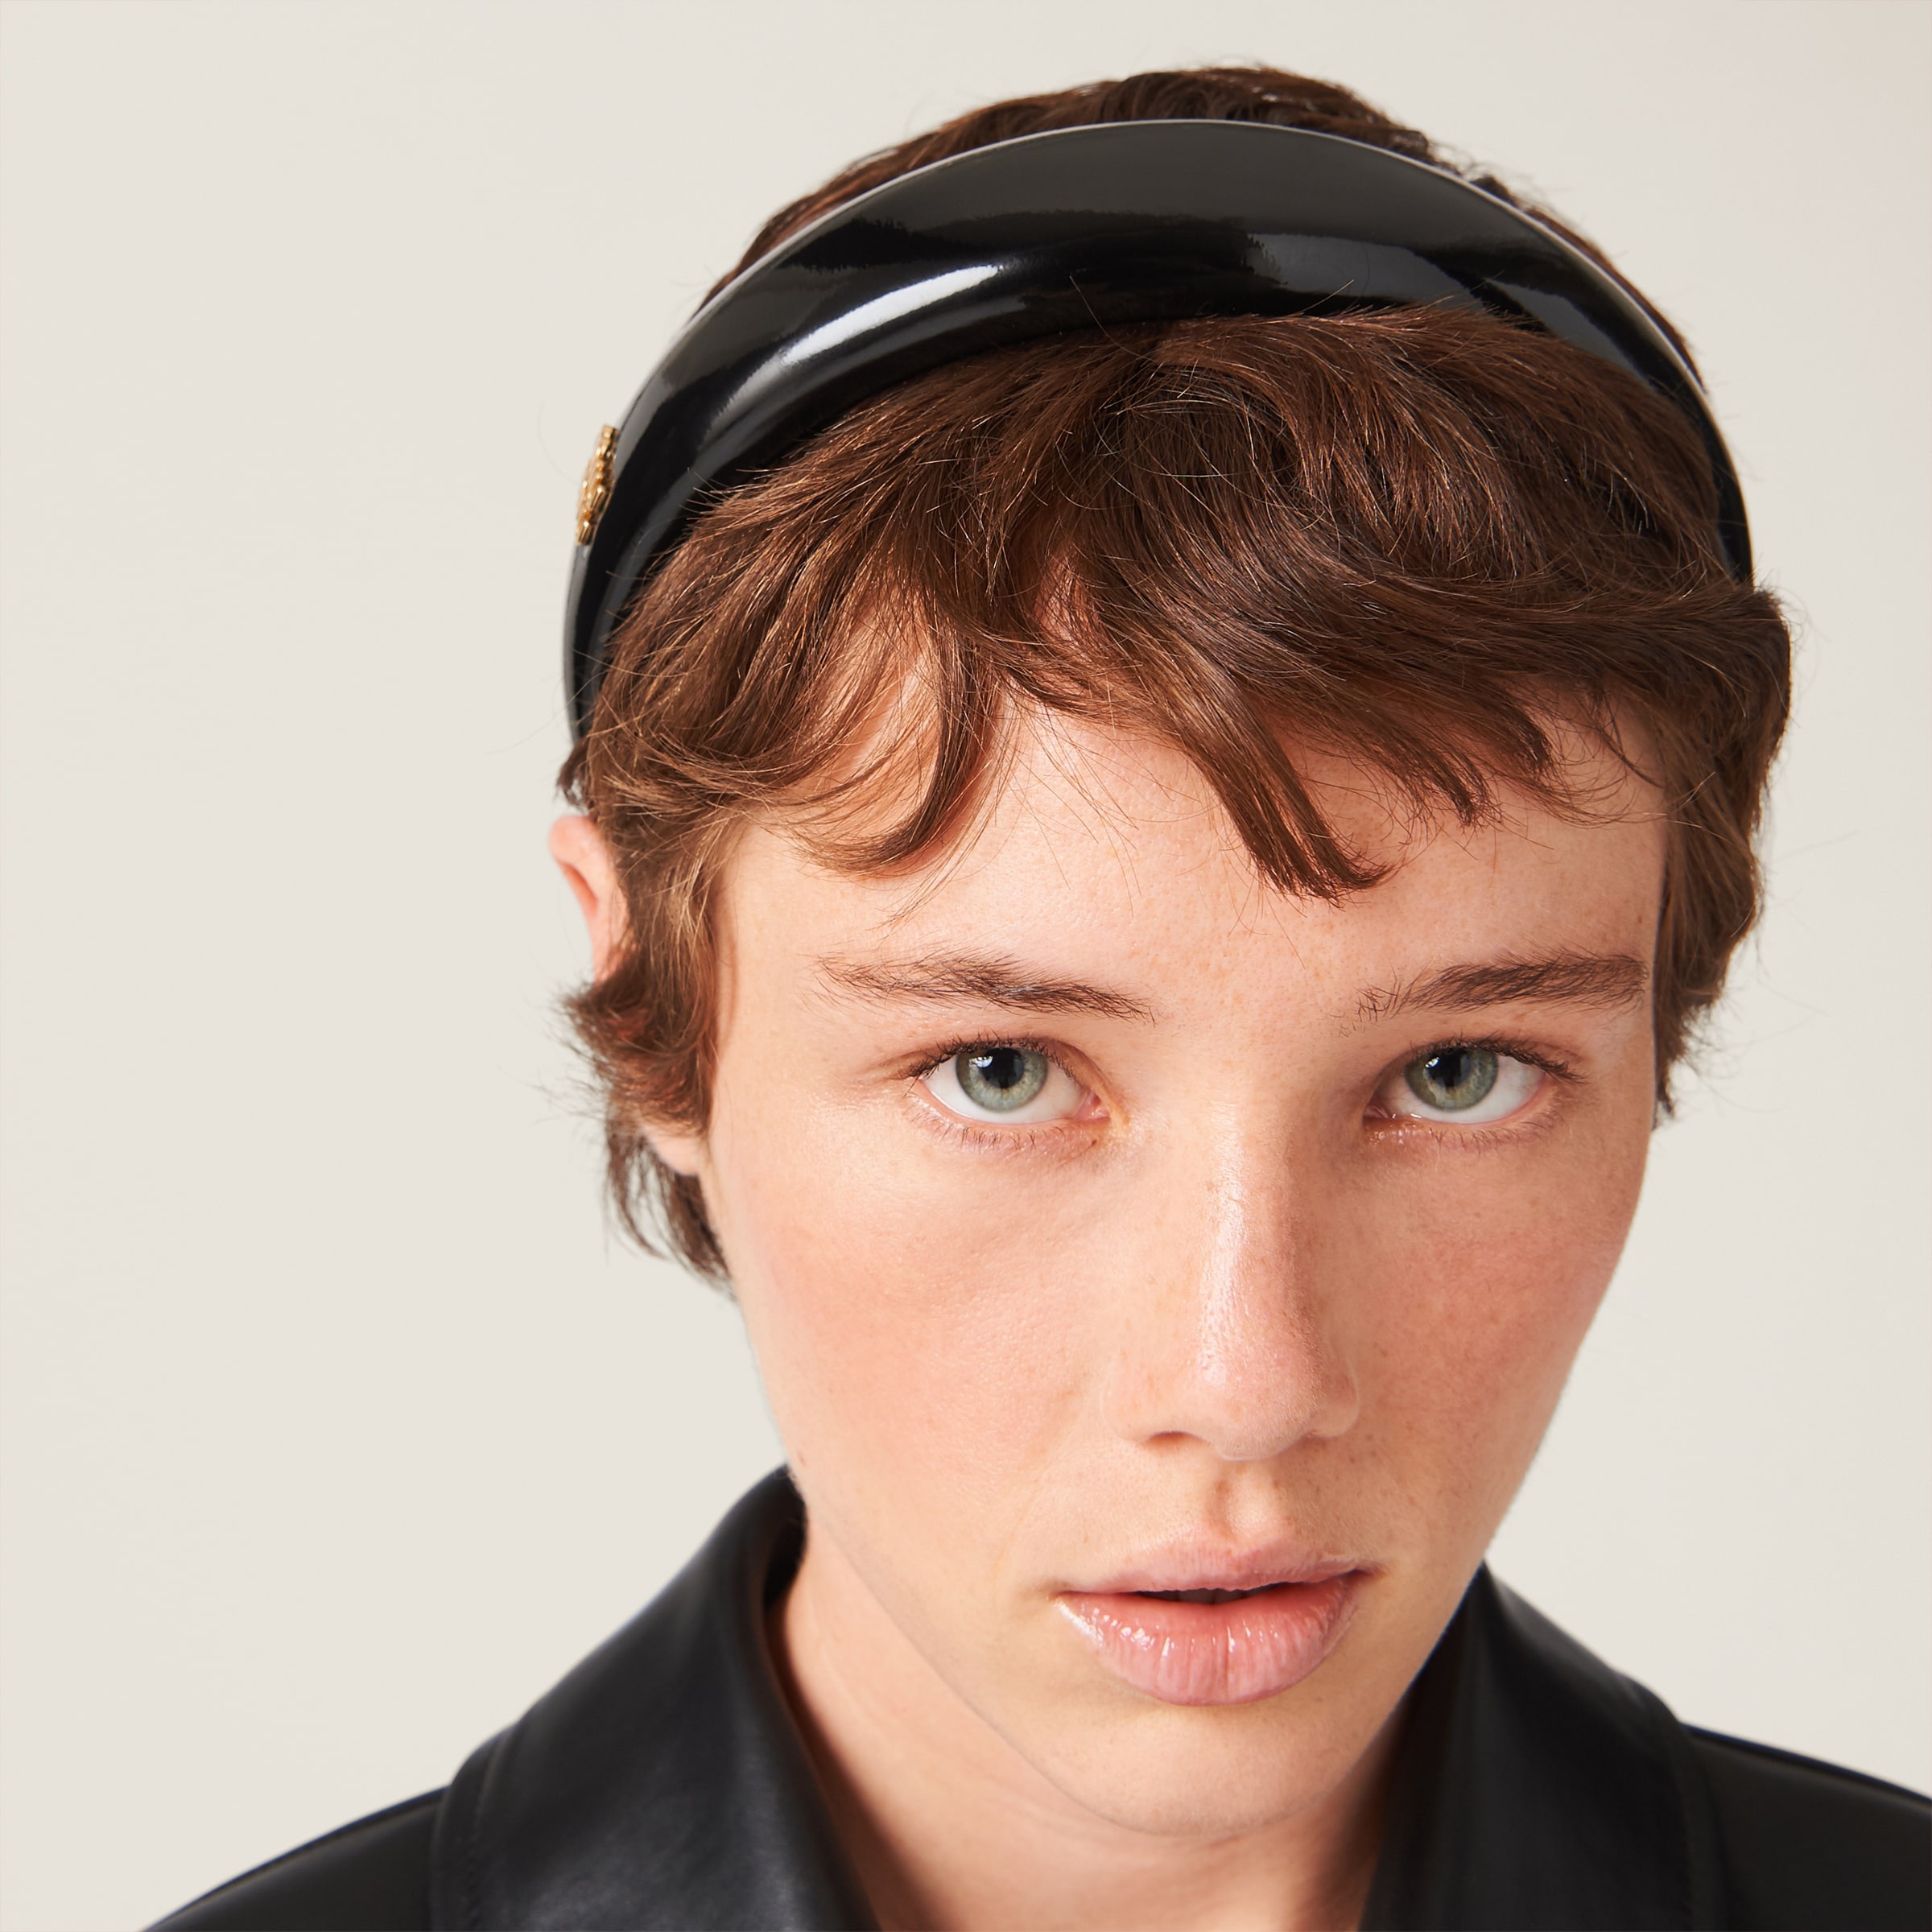 Patent leather headband - 4